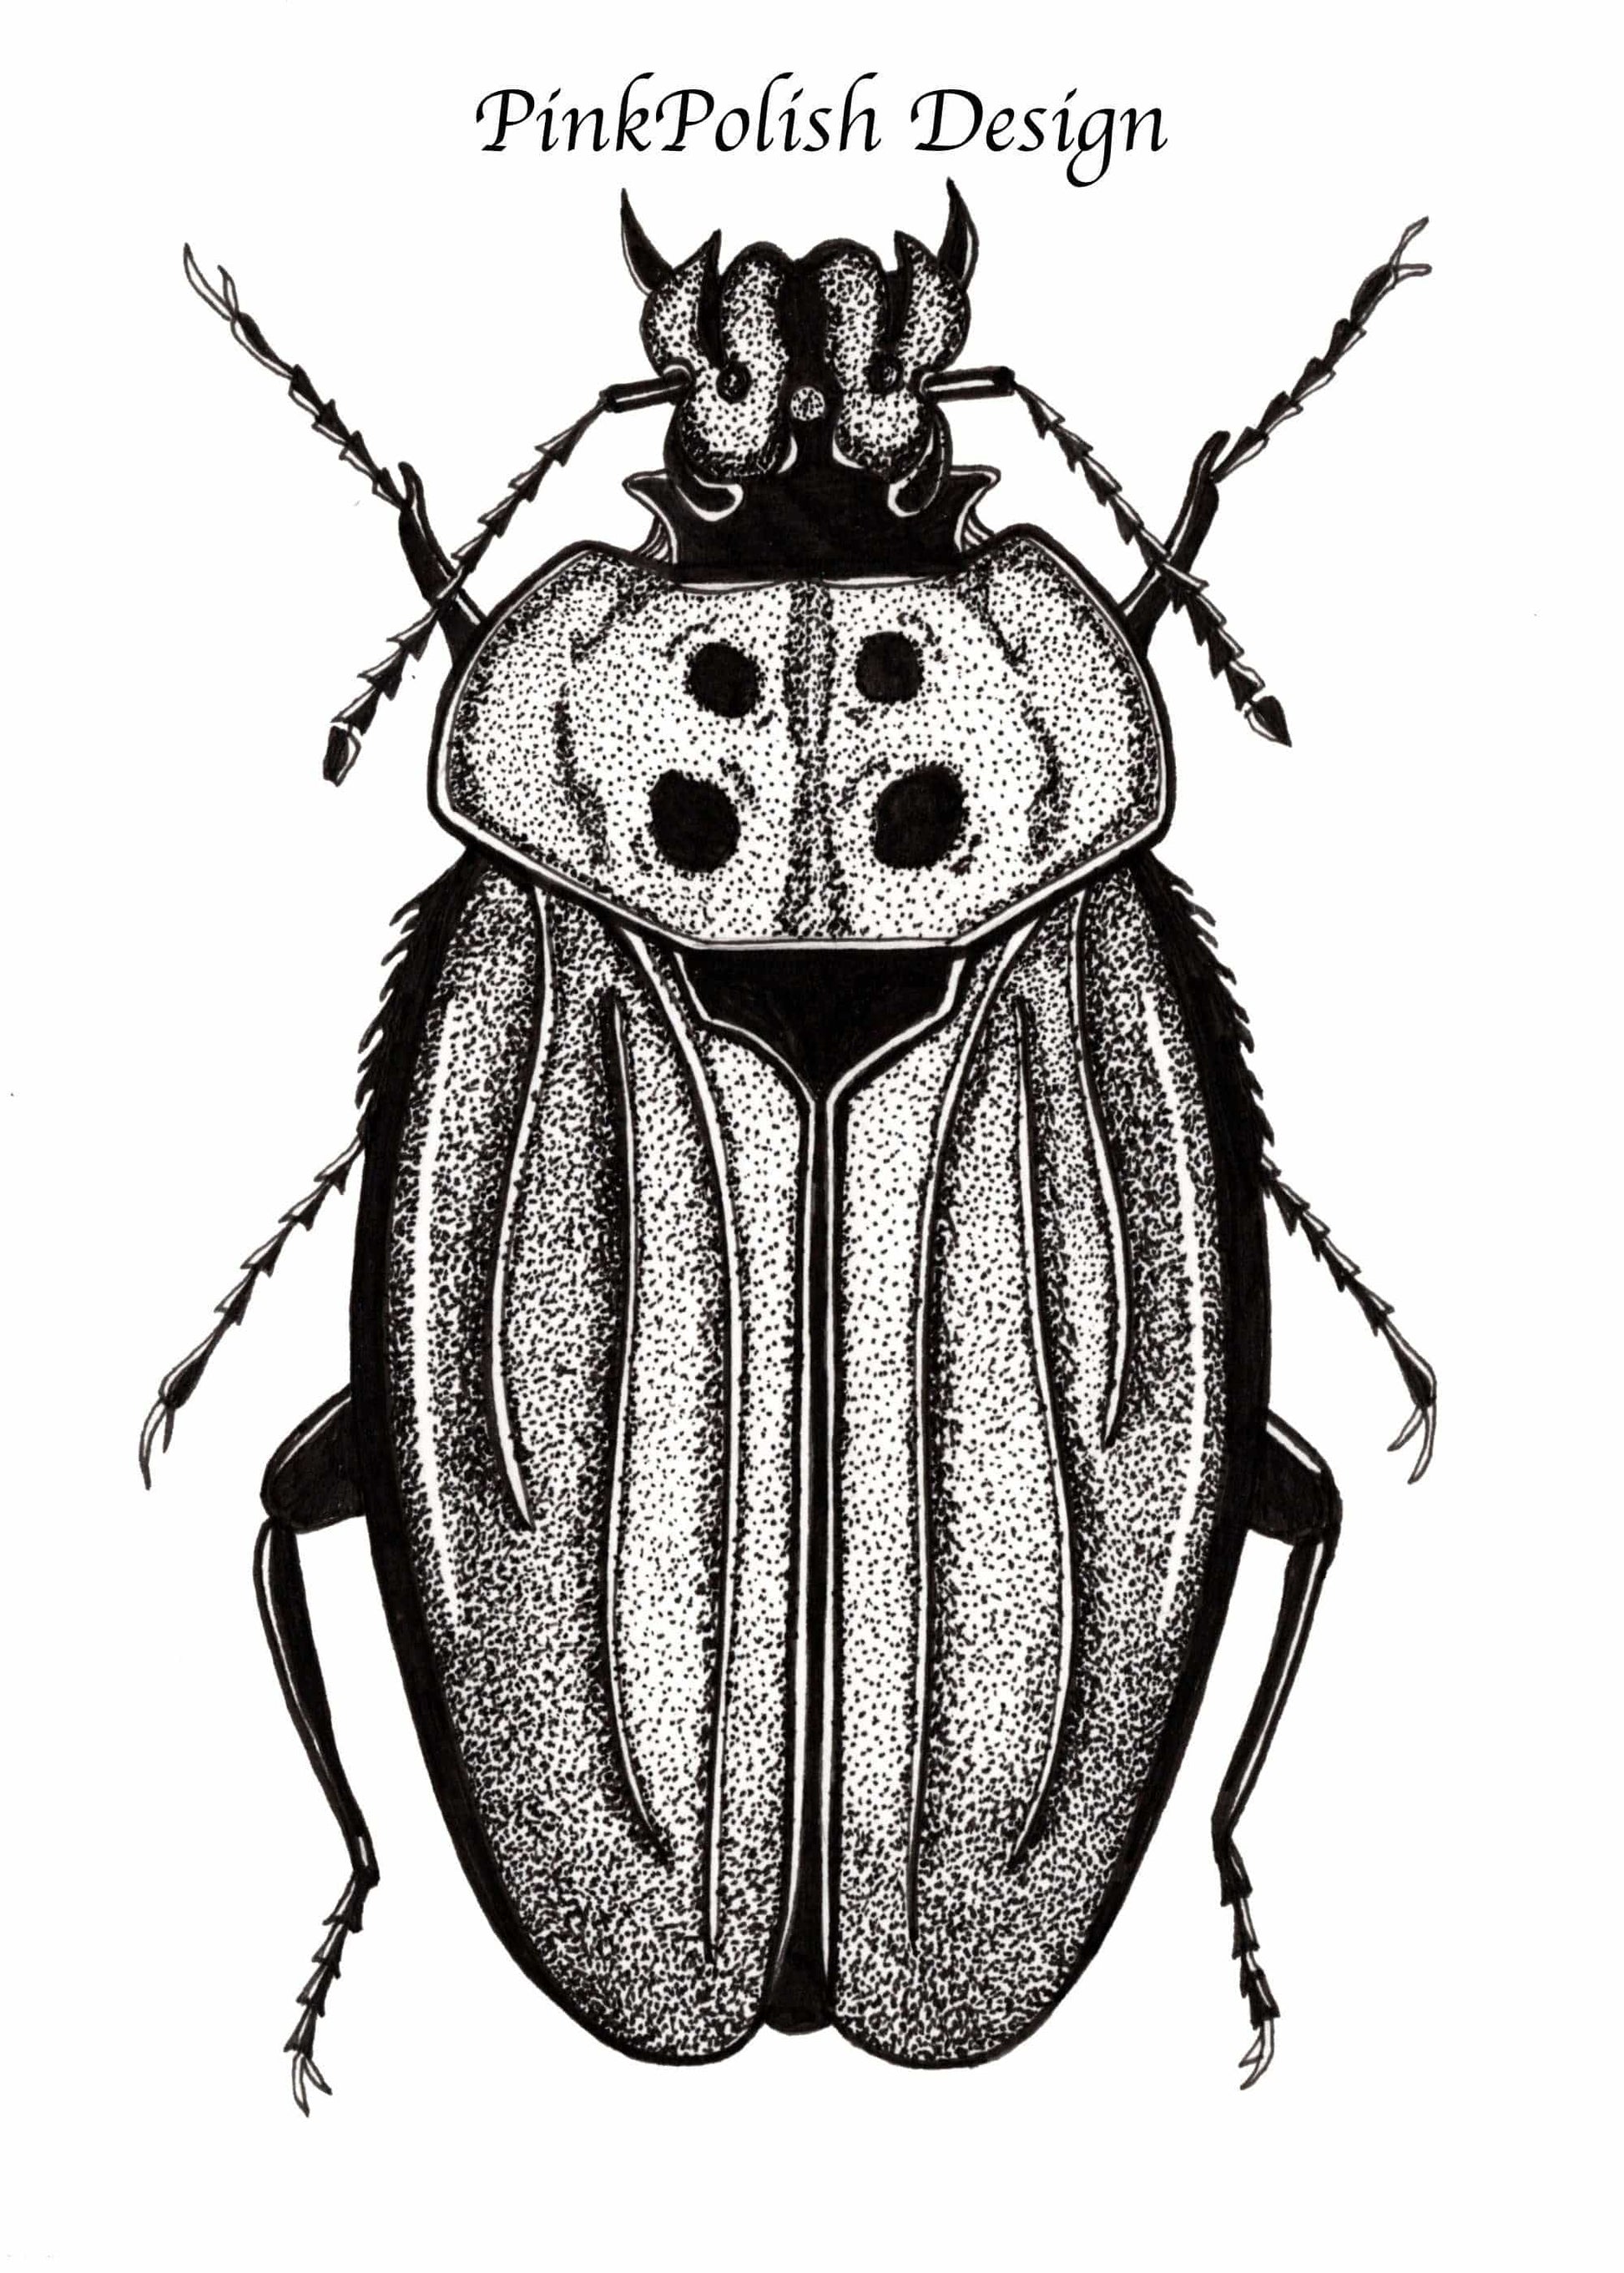 PinkPolish Design Art Prints "Beetle Distraction" Ink Drawing: Art Print